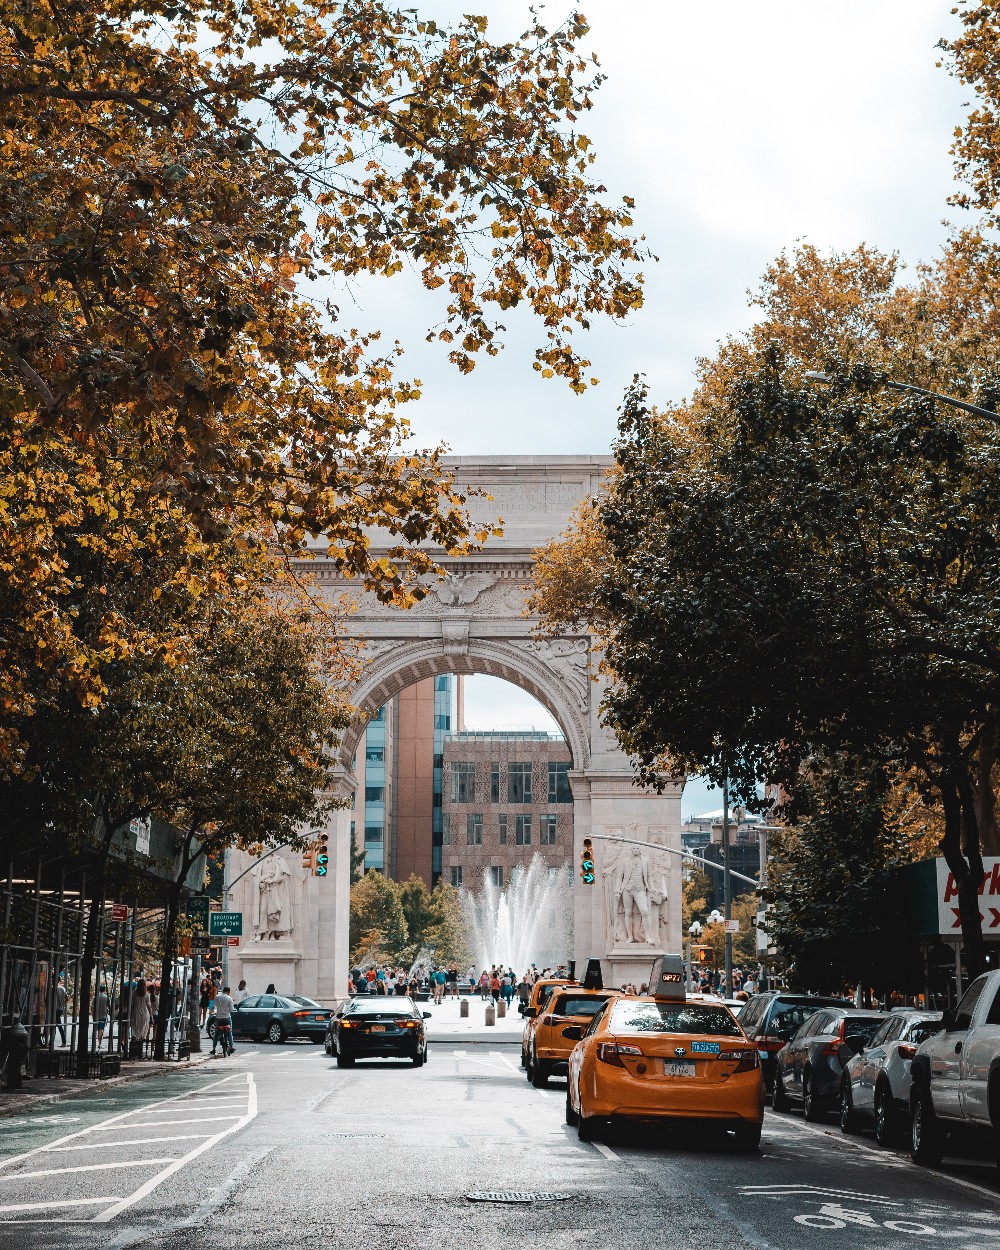 The arch in Washington Square park